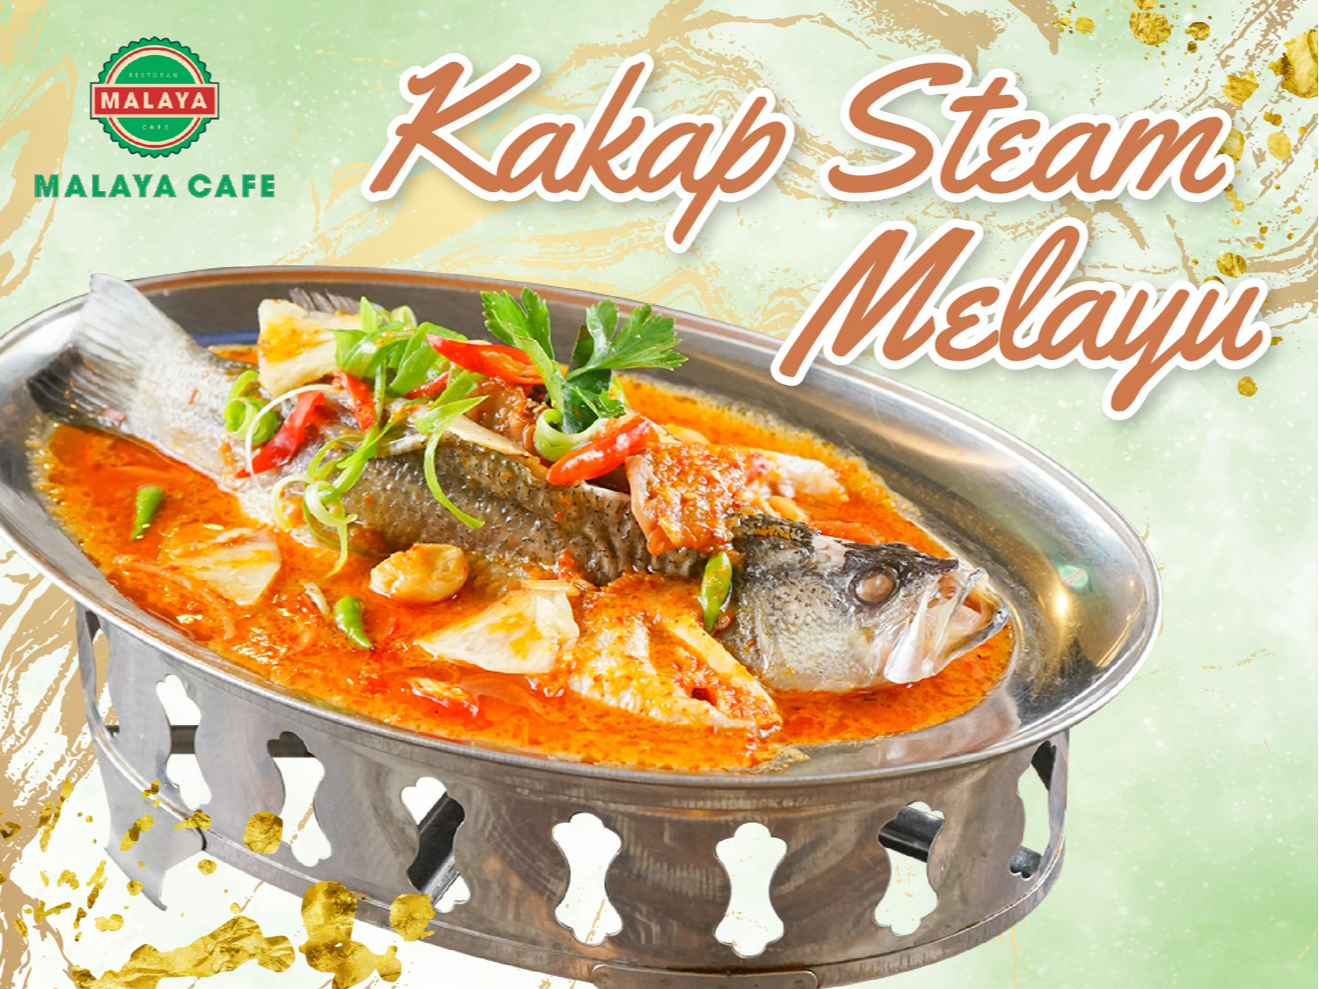 Malaya Restaurant & Cafe, BCS